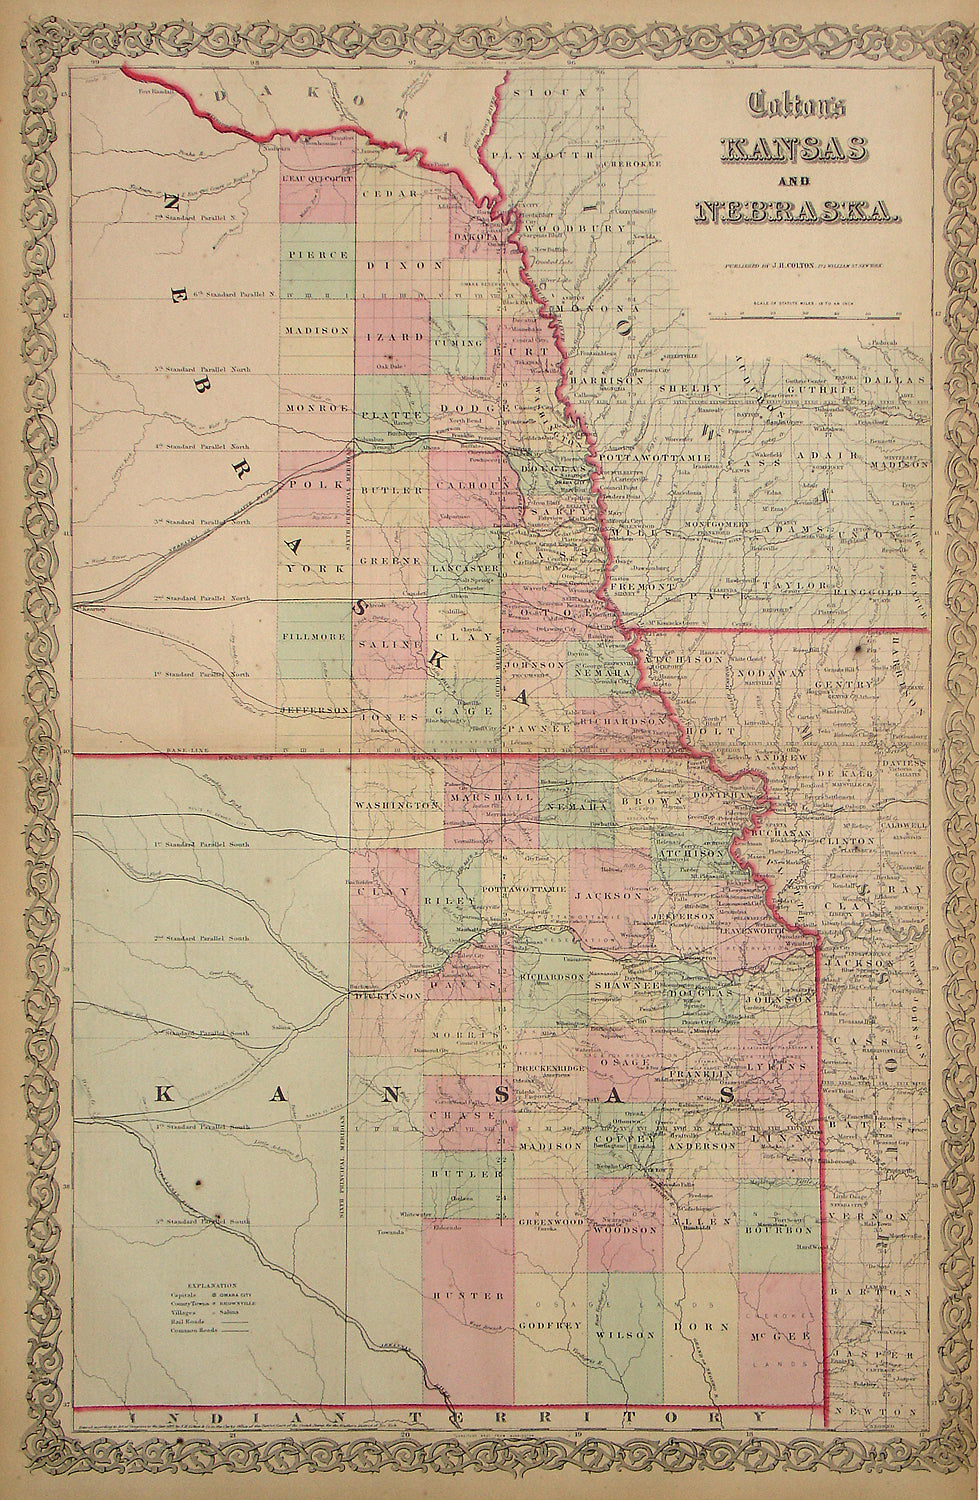 (KS. - NE.) Colton's Kansas and Nebraska